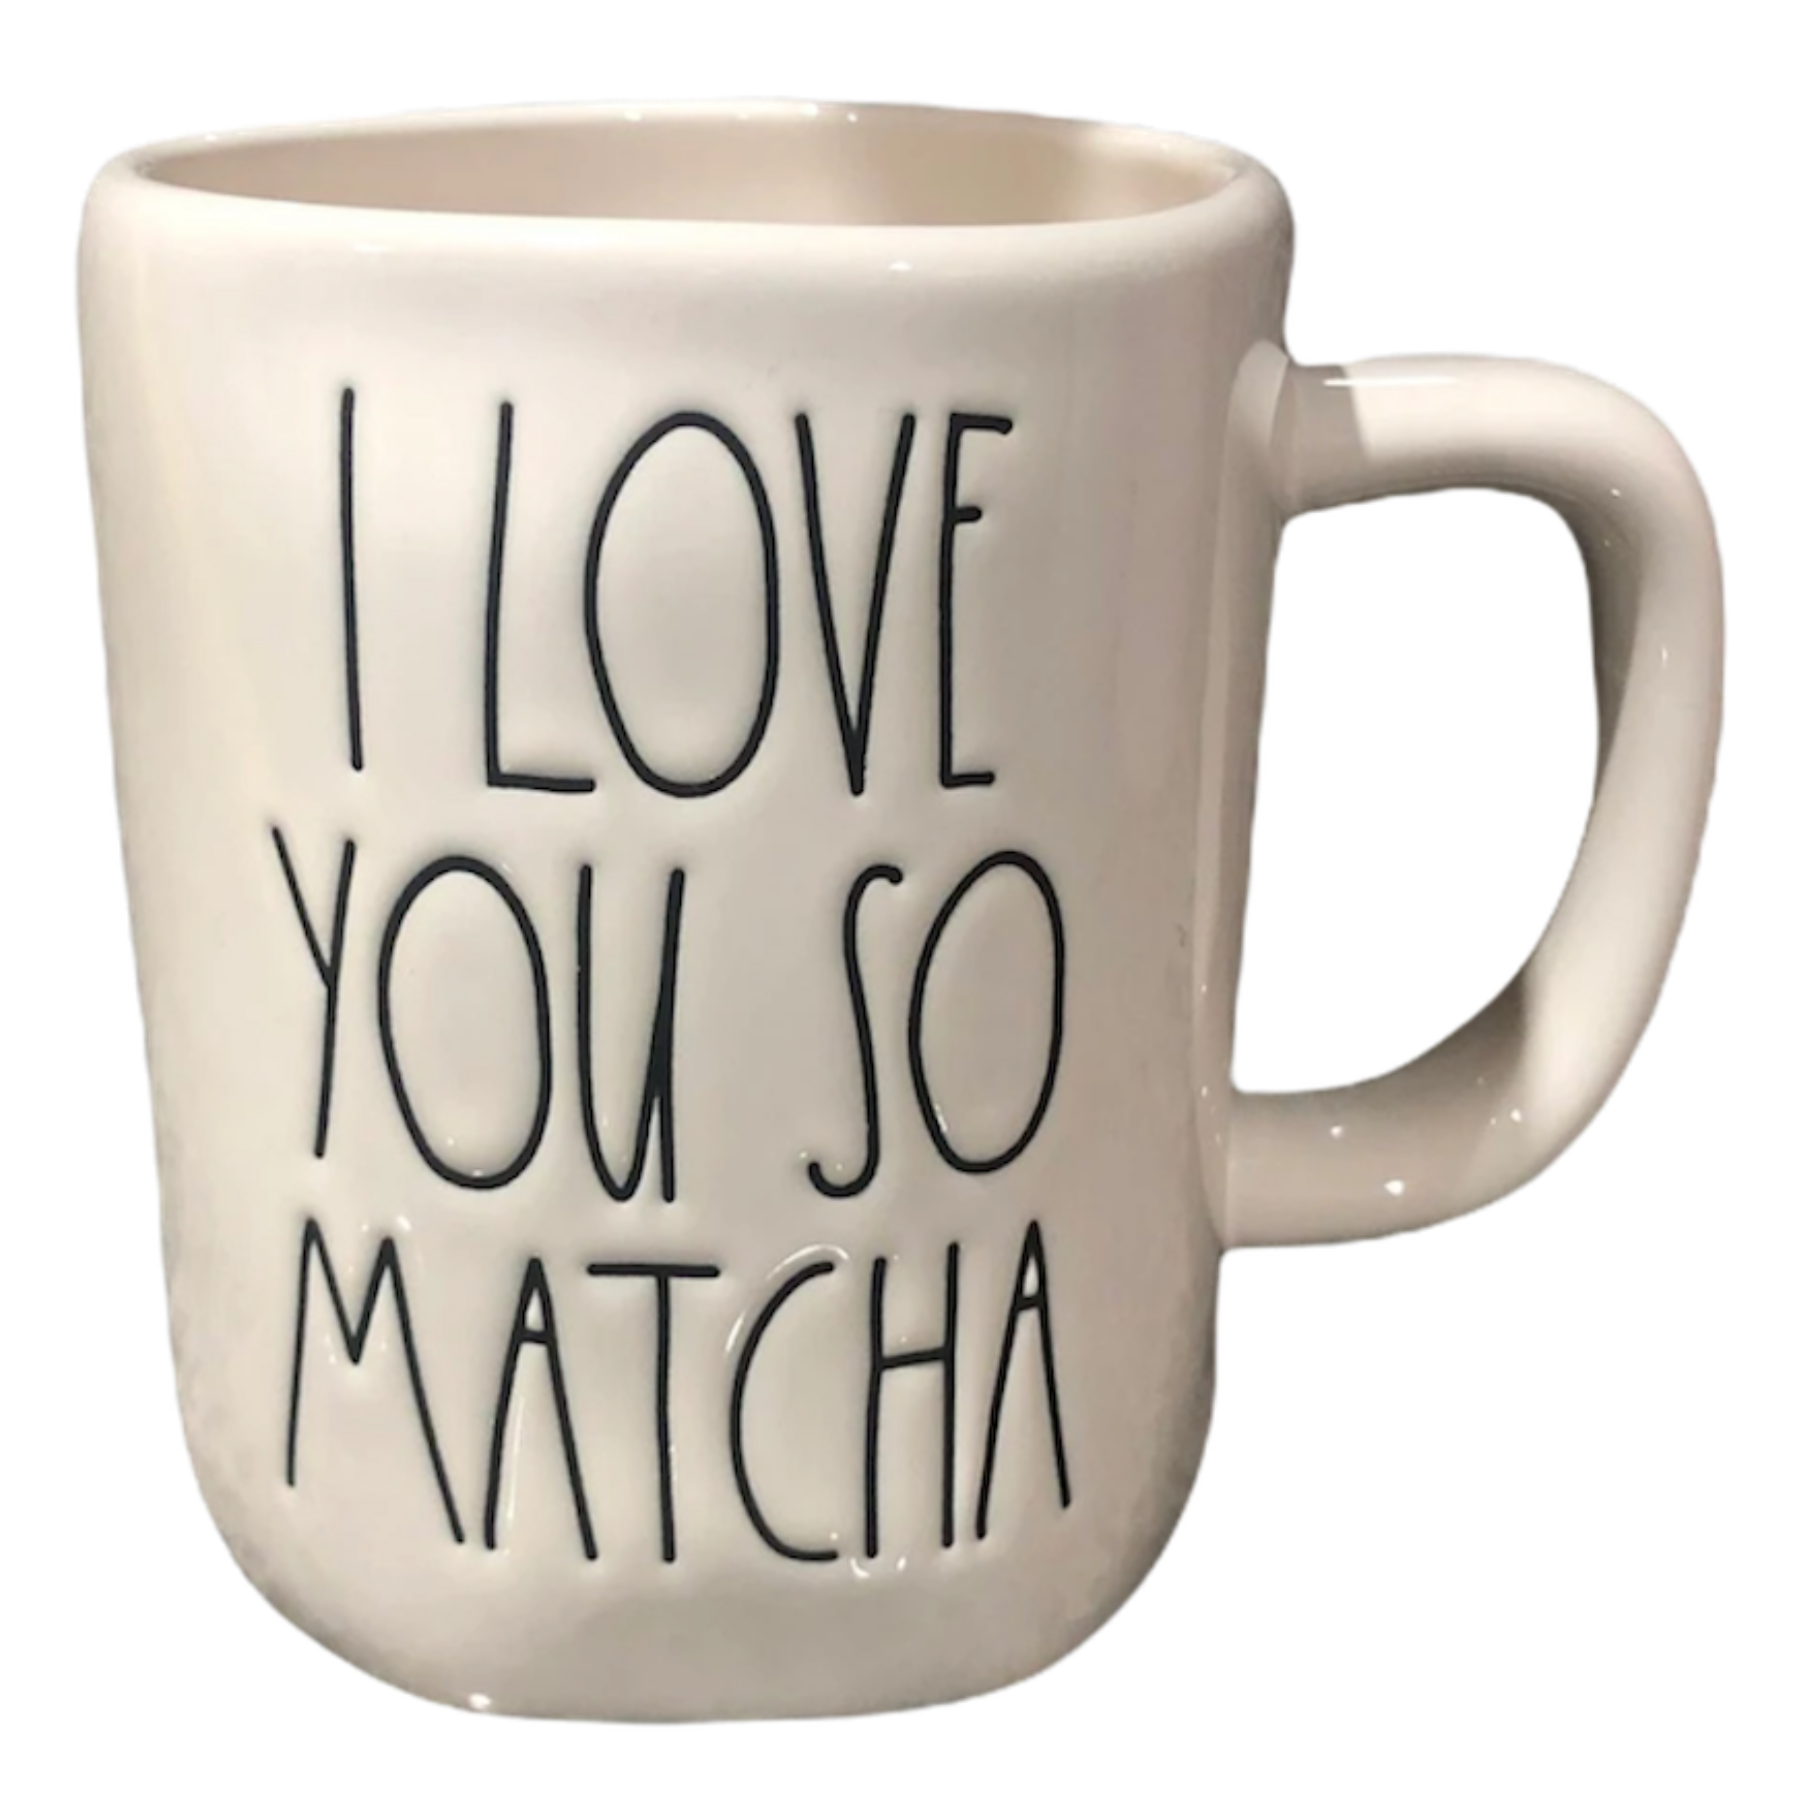 I Love You So Matcha Coffee Mug by karolinapaz